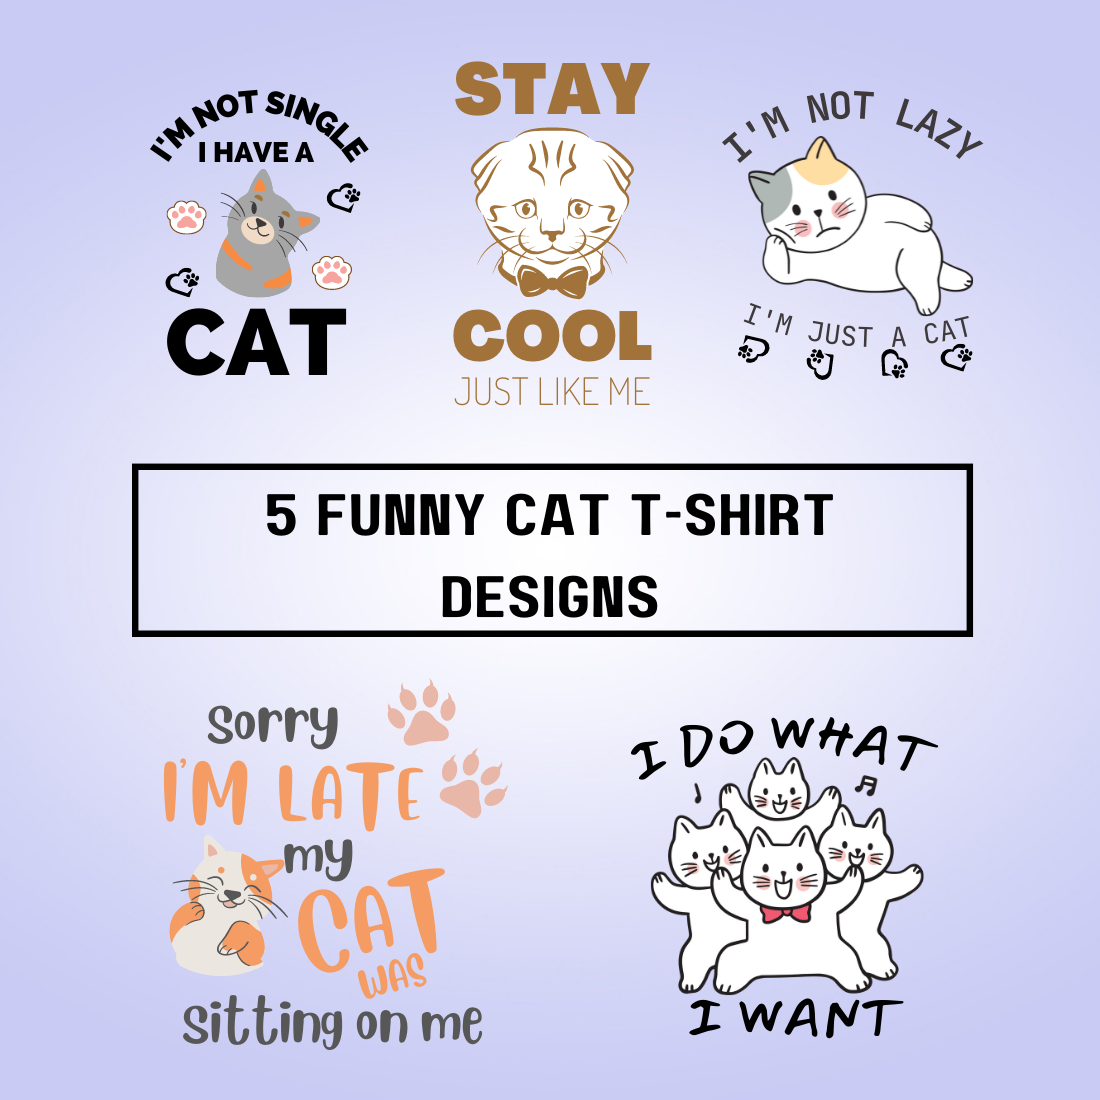 5 Funny Cat T-shirt Designs PDF file cover image